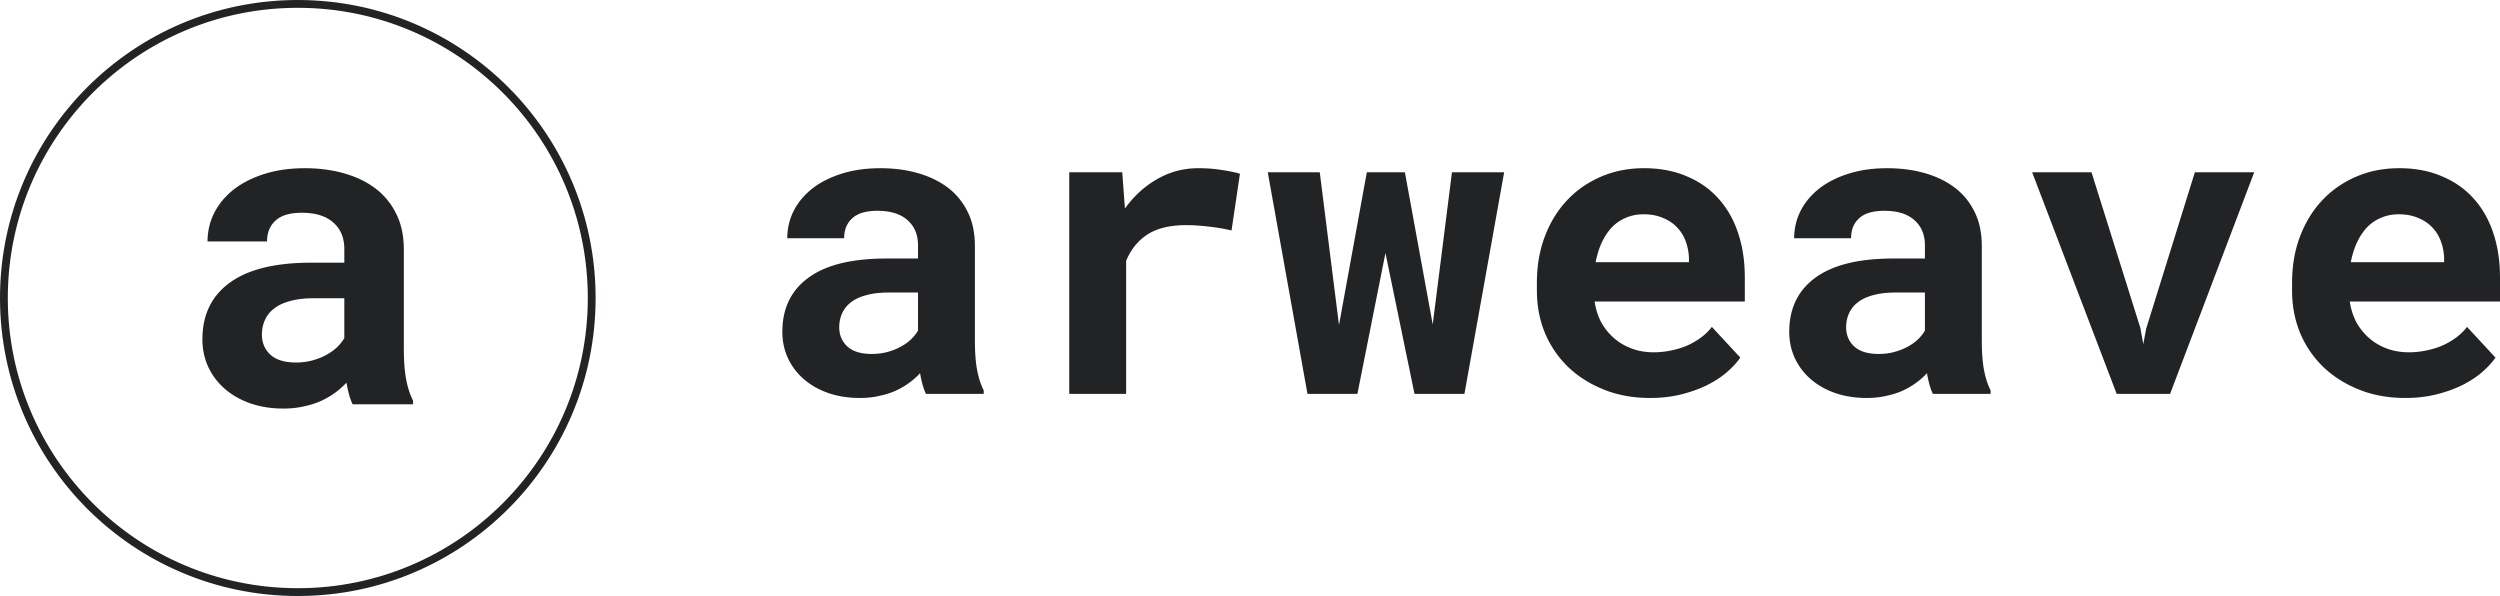 arweave ar logo